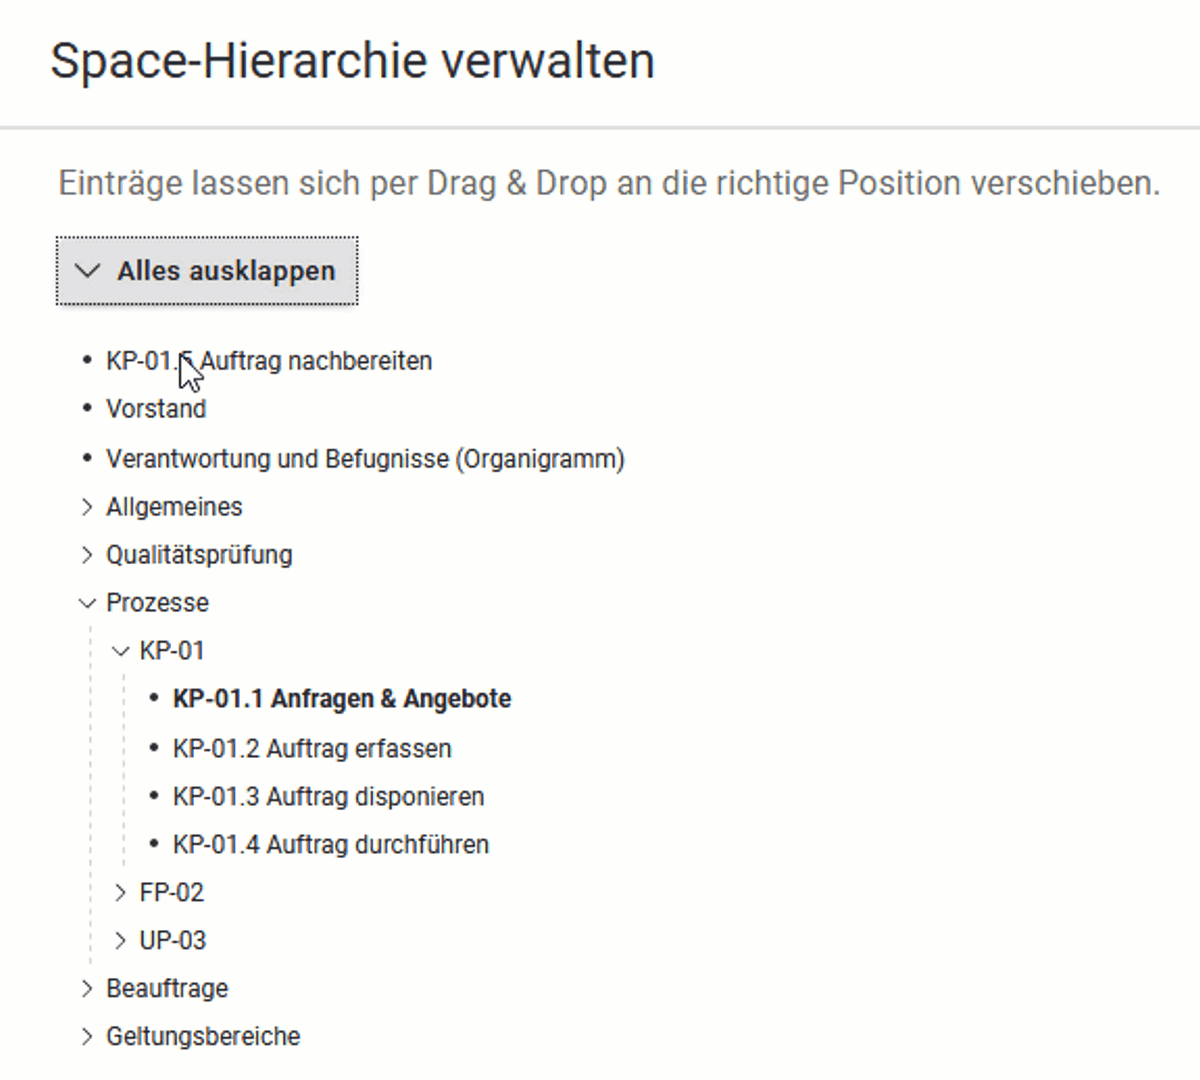 Space-Hierarchie